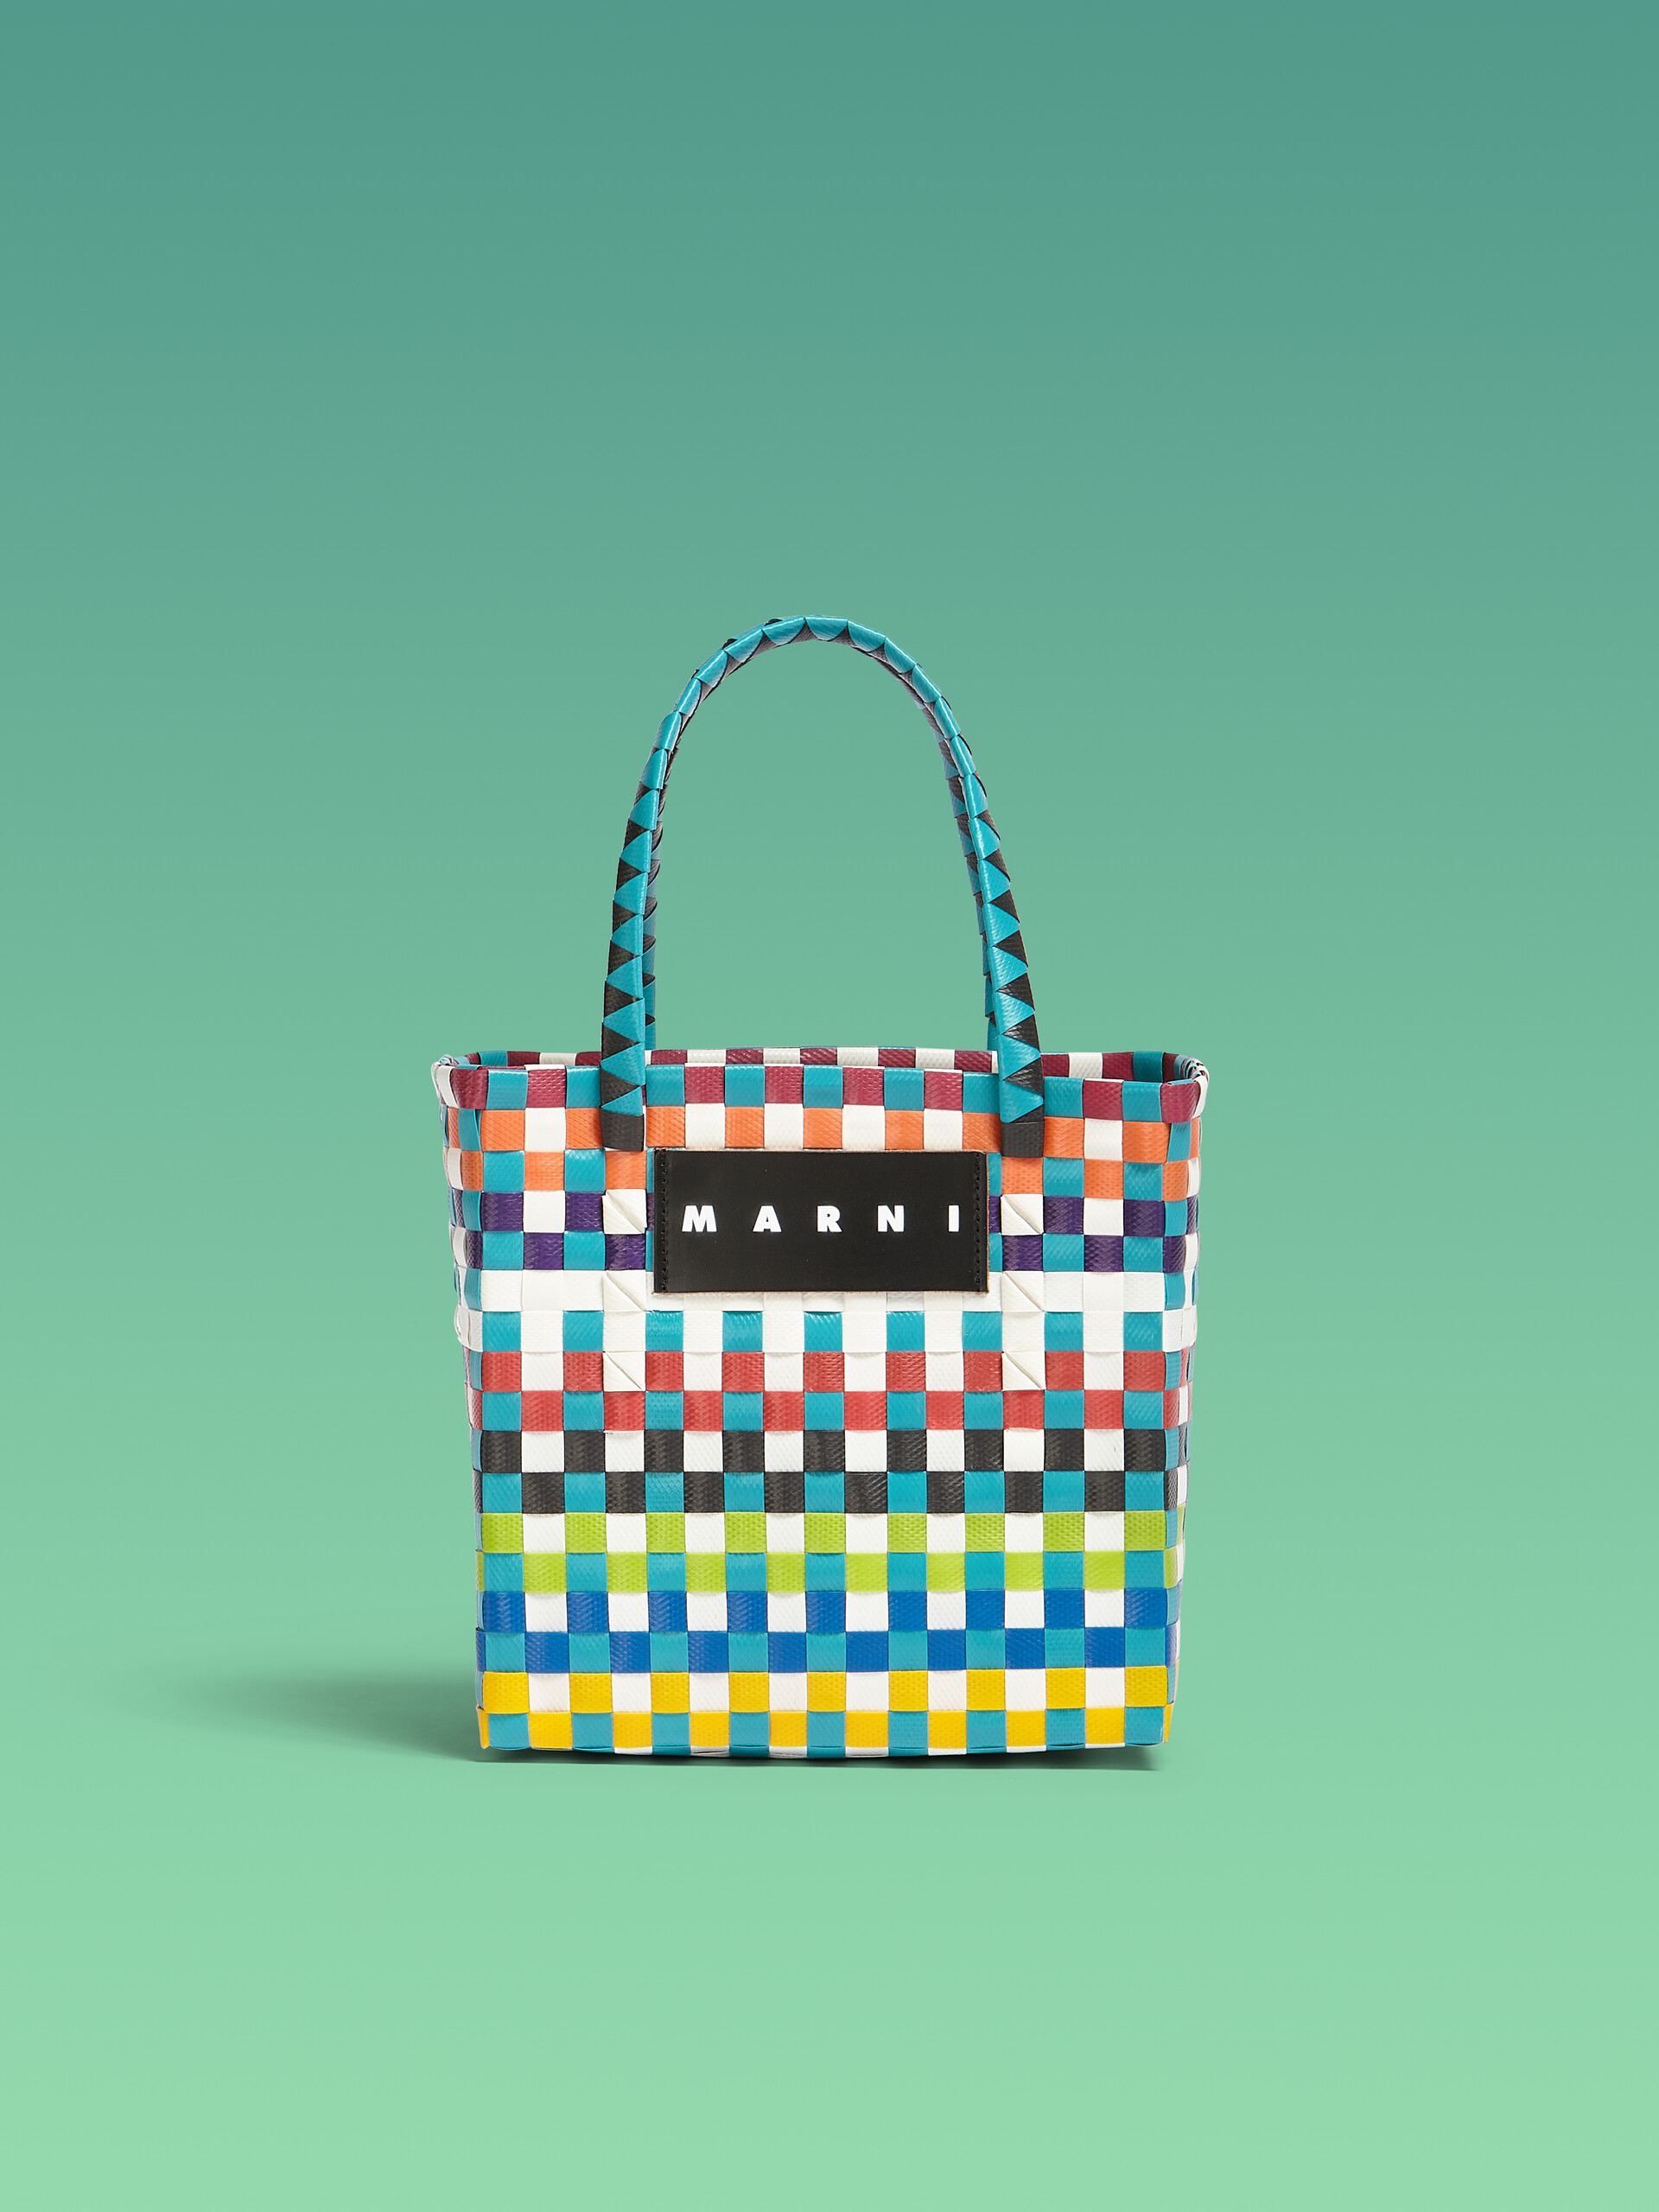 MARNI MARKET MINI BASKET bag in multicolor woven material - Bags - Image 1